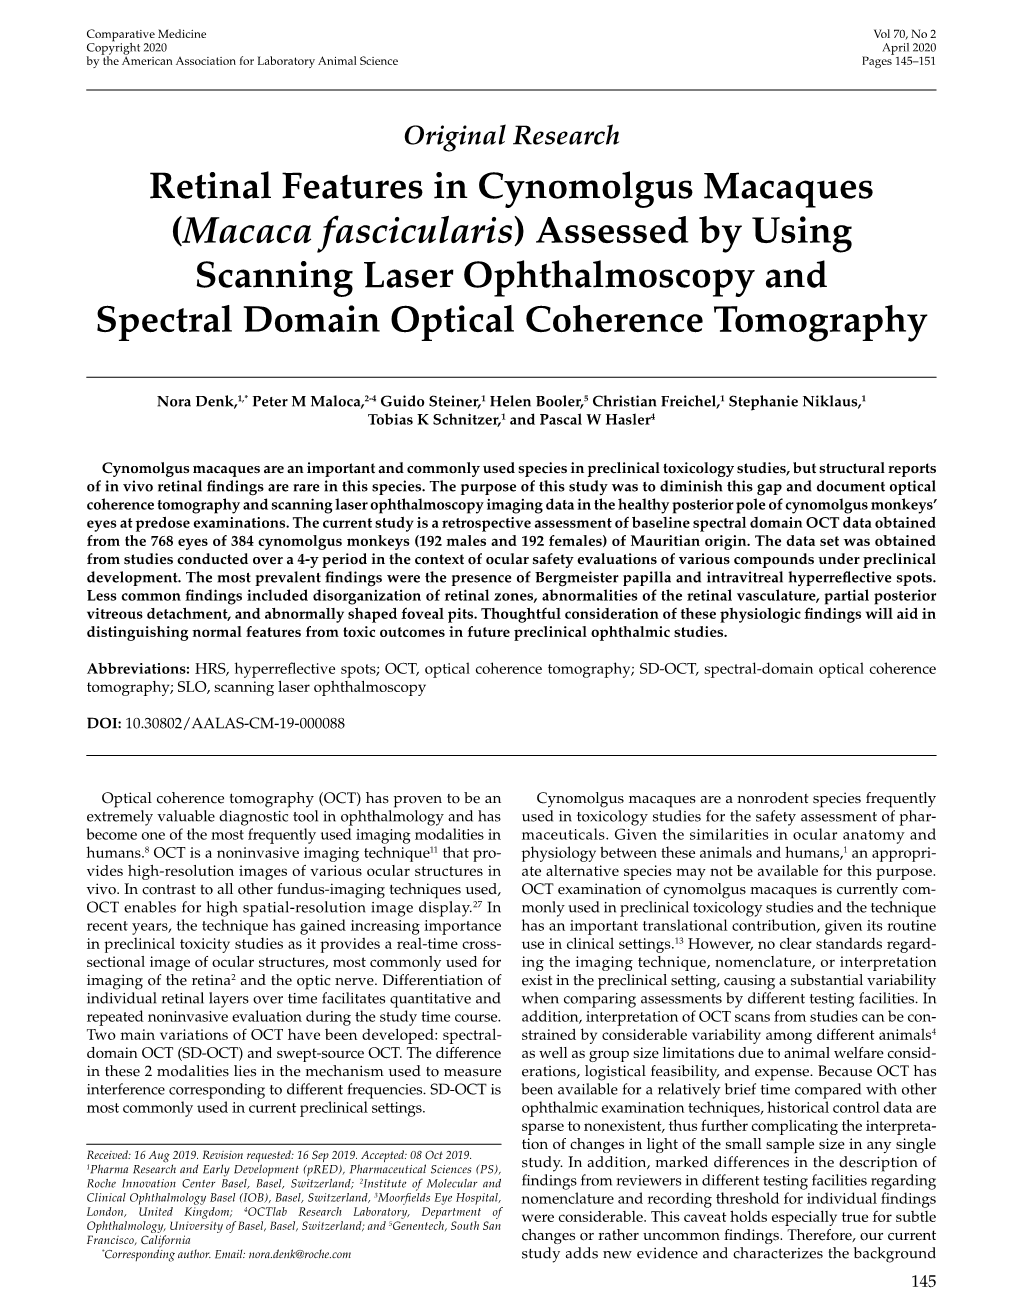 Retinal Features in Cynomolgus Macaques (&lt;I